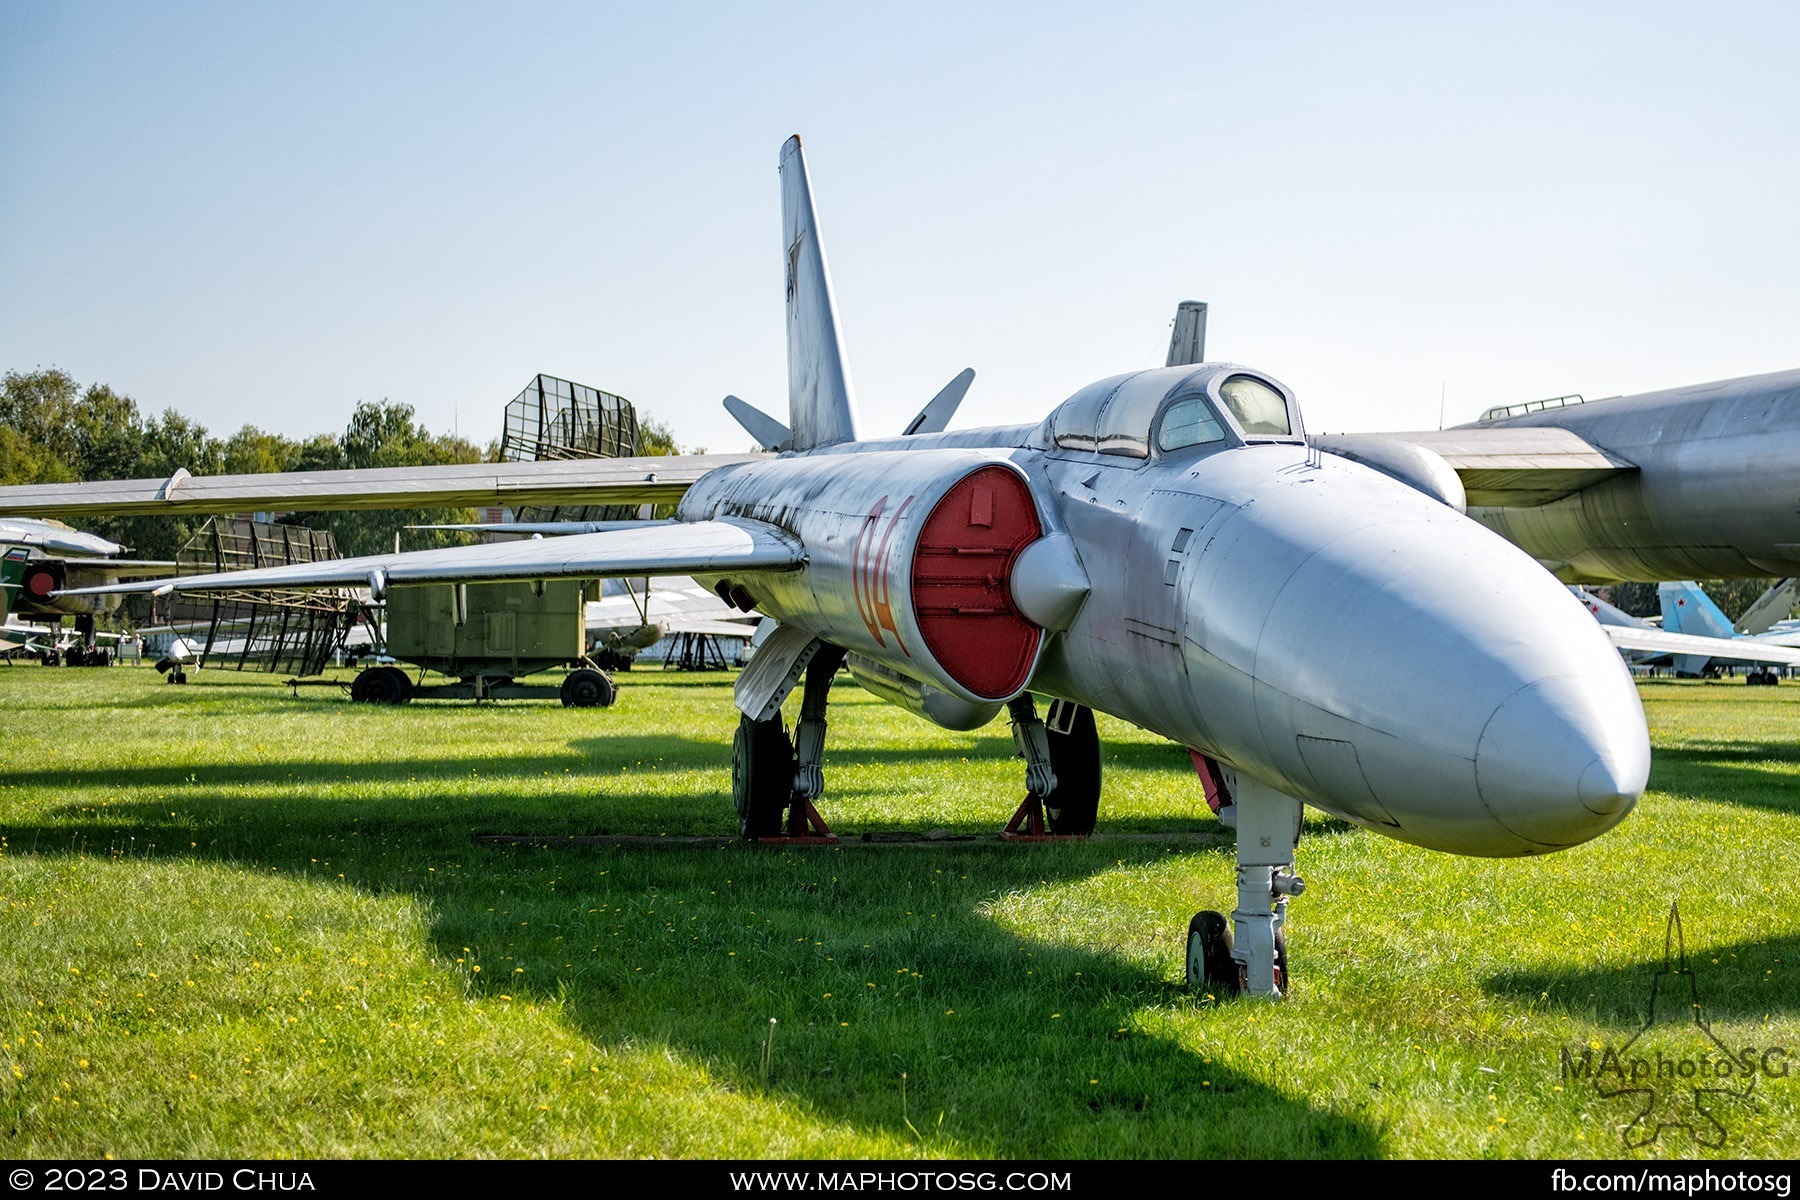 Lavochkin La-250 Supersonic interceptor. Only 5 were built.